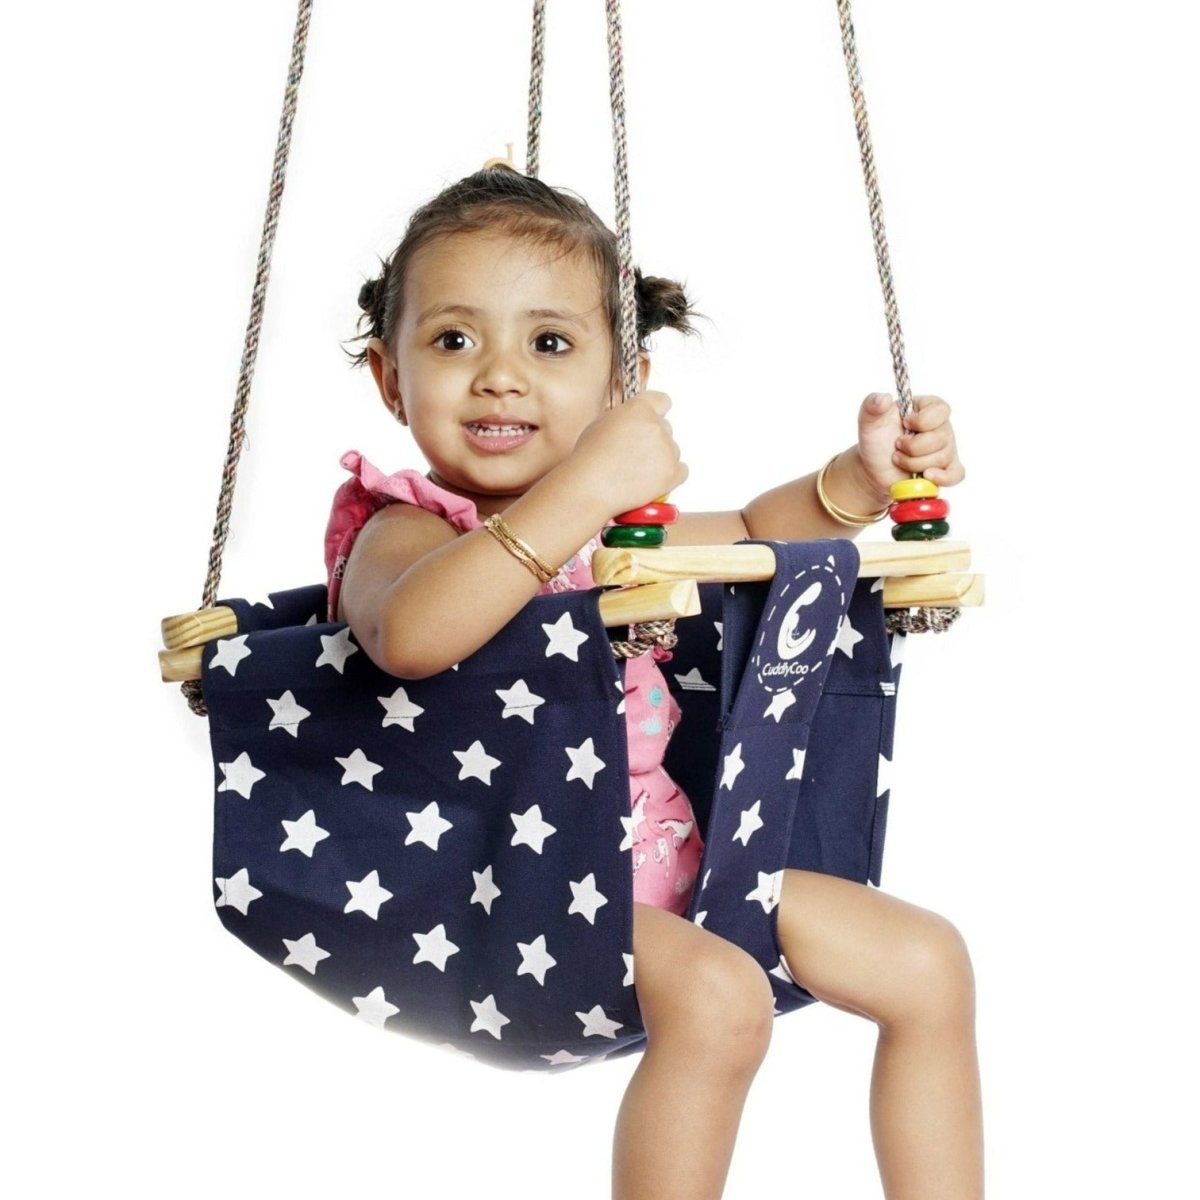 CuddlyCoo Toddler Swing - Blue Star - TODSWIBS